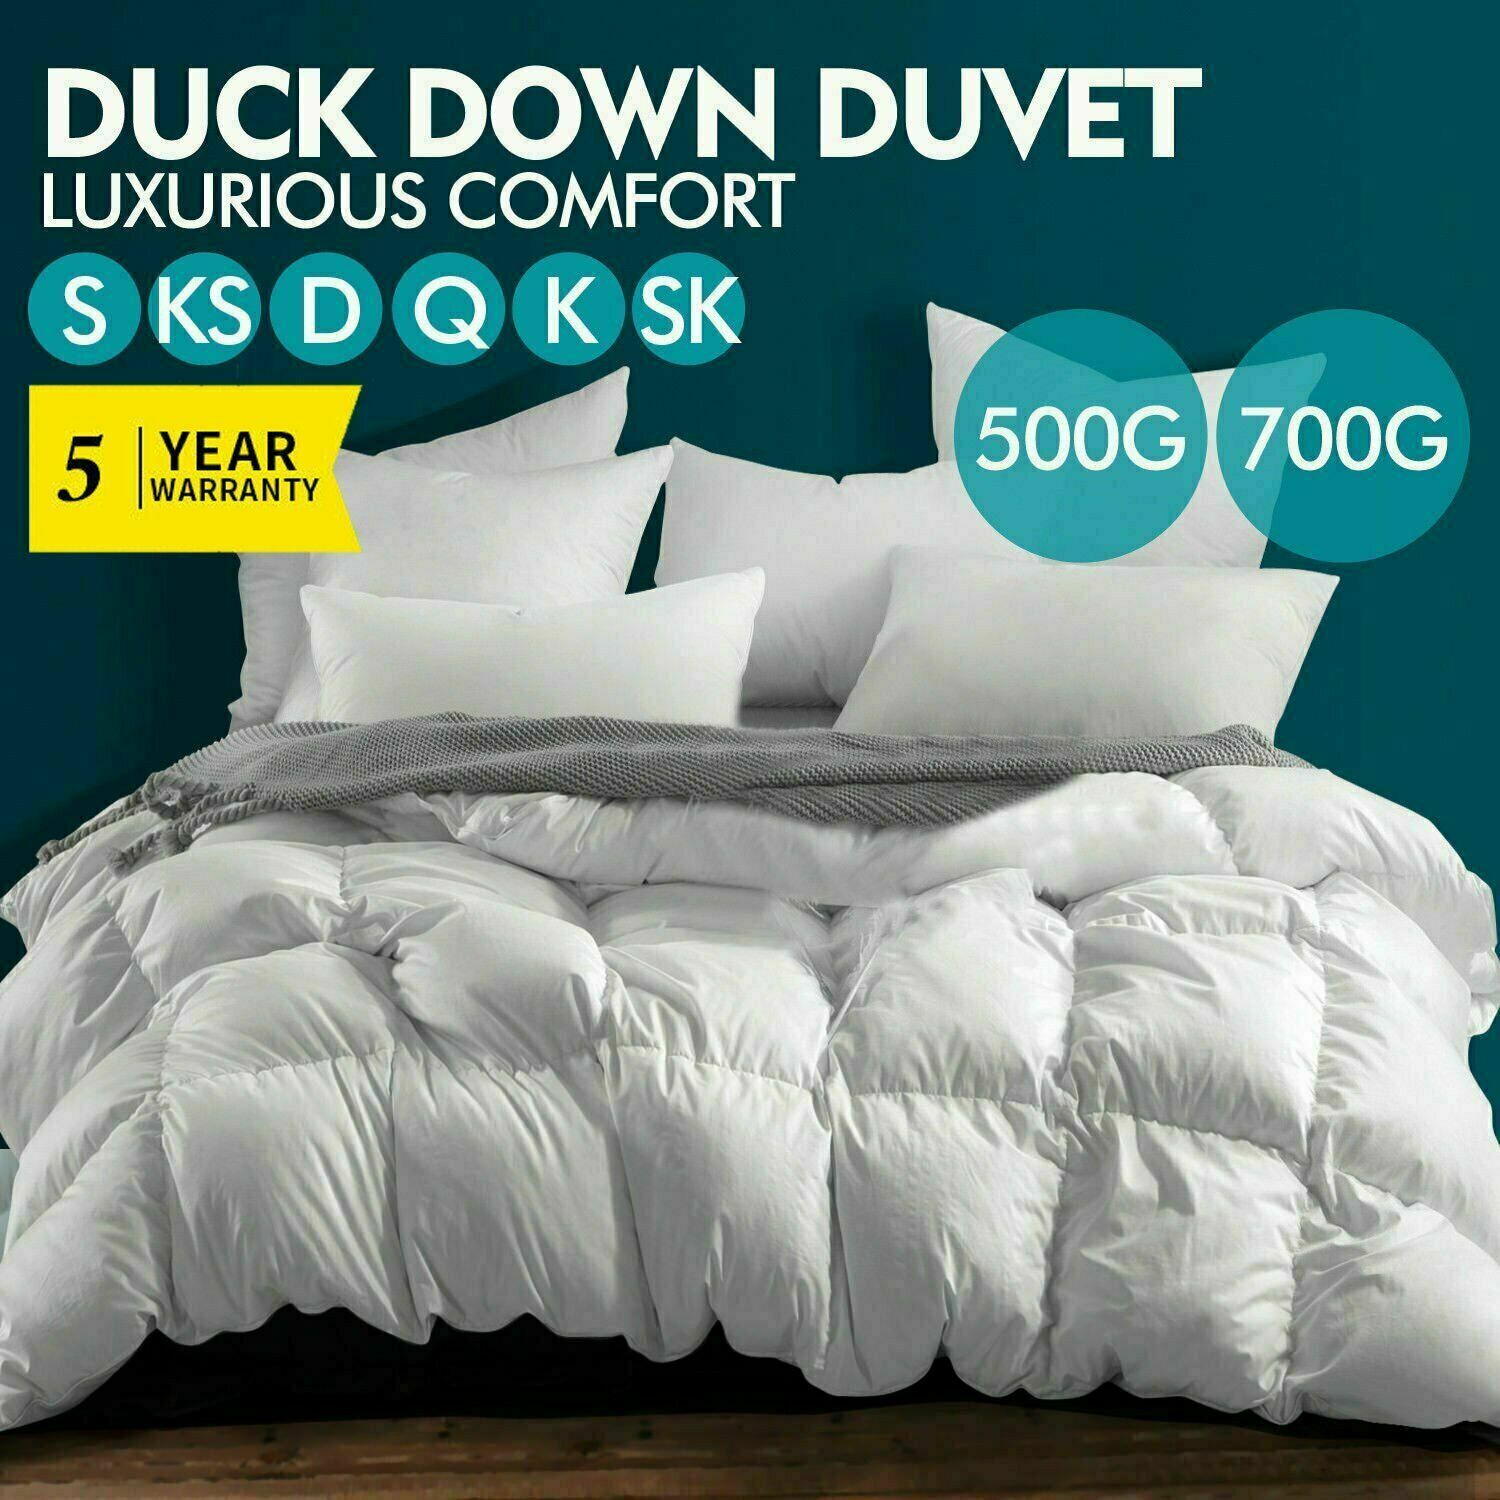 700gsm Duvet Doona Quilt Duck Down Feather Bedding Summer Winter